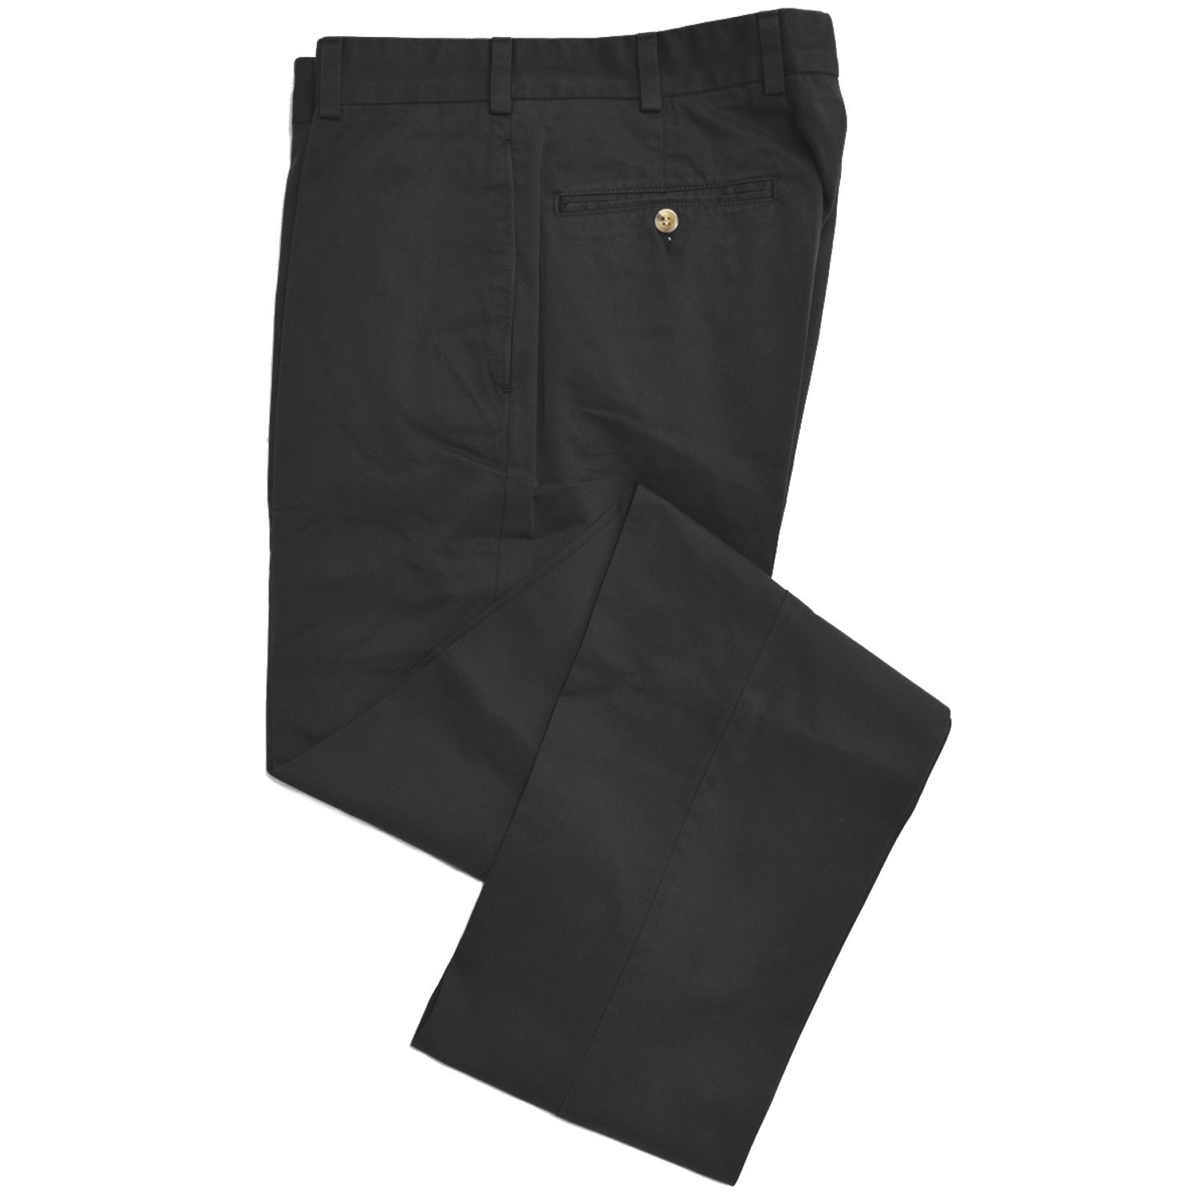 Chamois Cloth Pant - Model F2 Standard Fit Plain Front in Black by Hansen's  Khakis - Hansen's Clothing